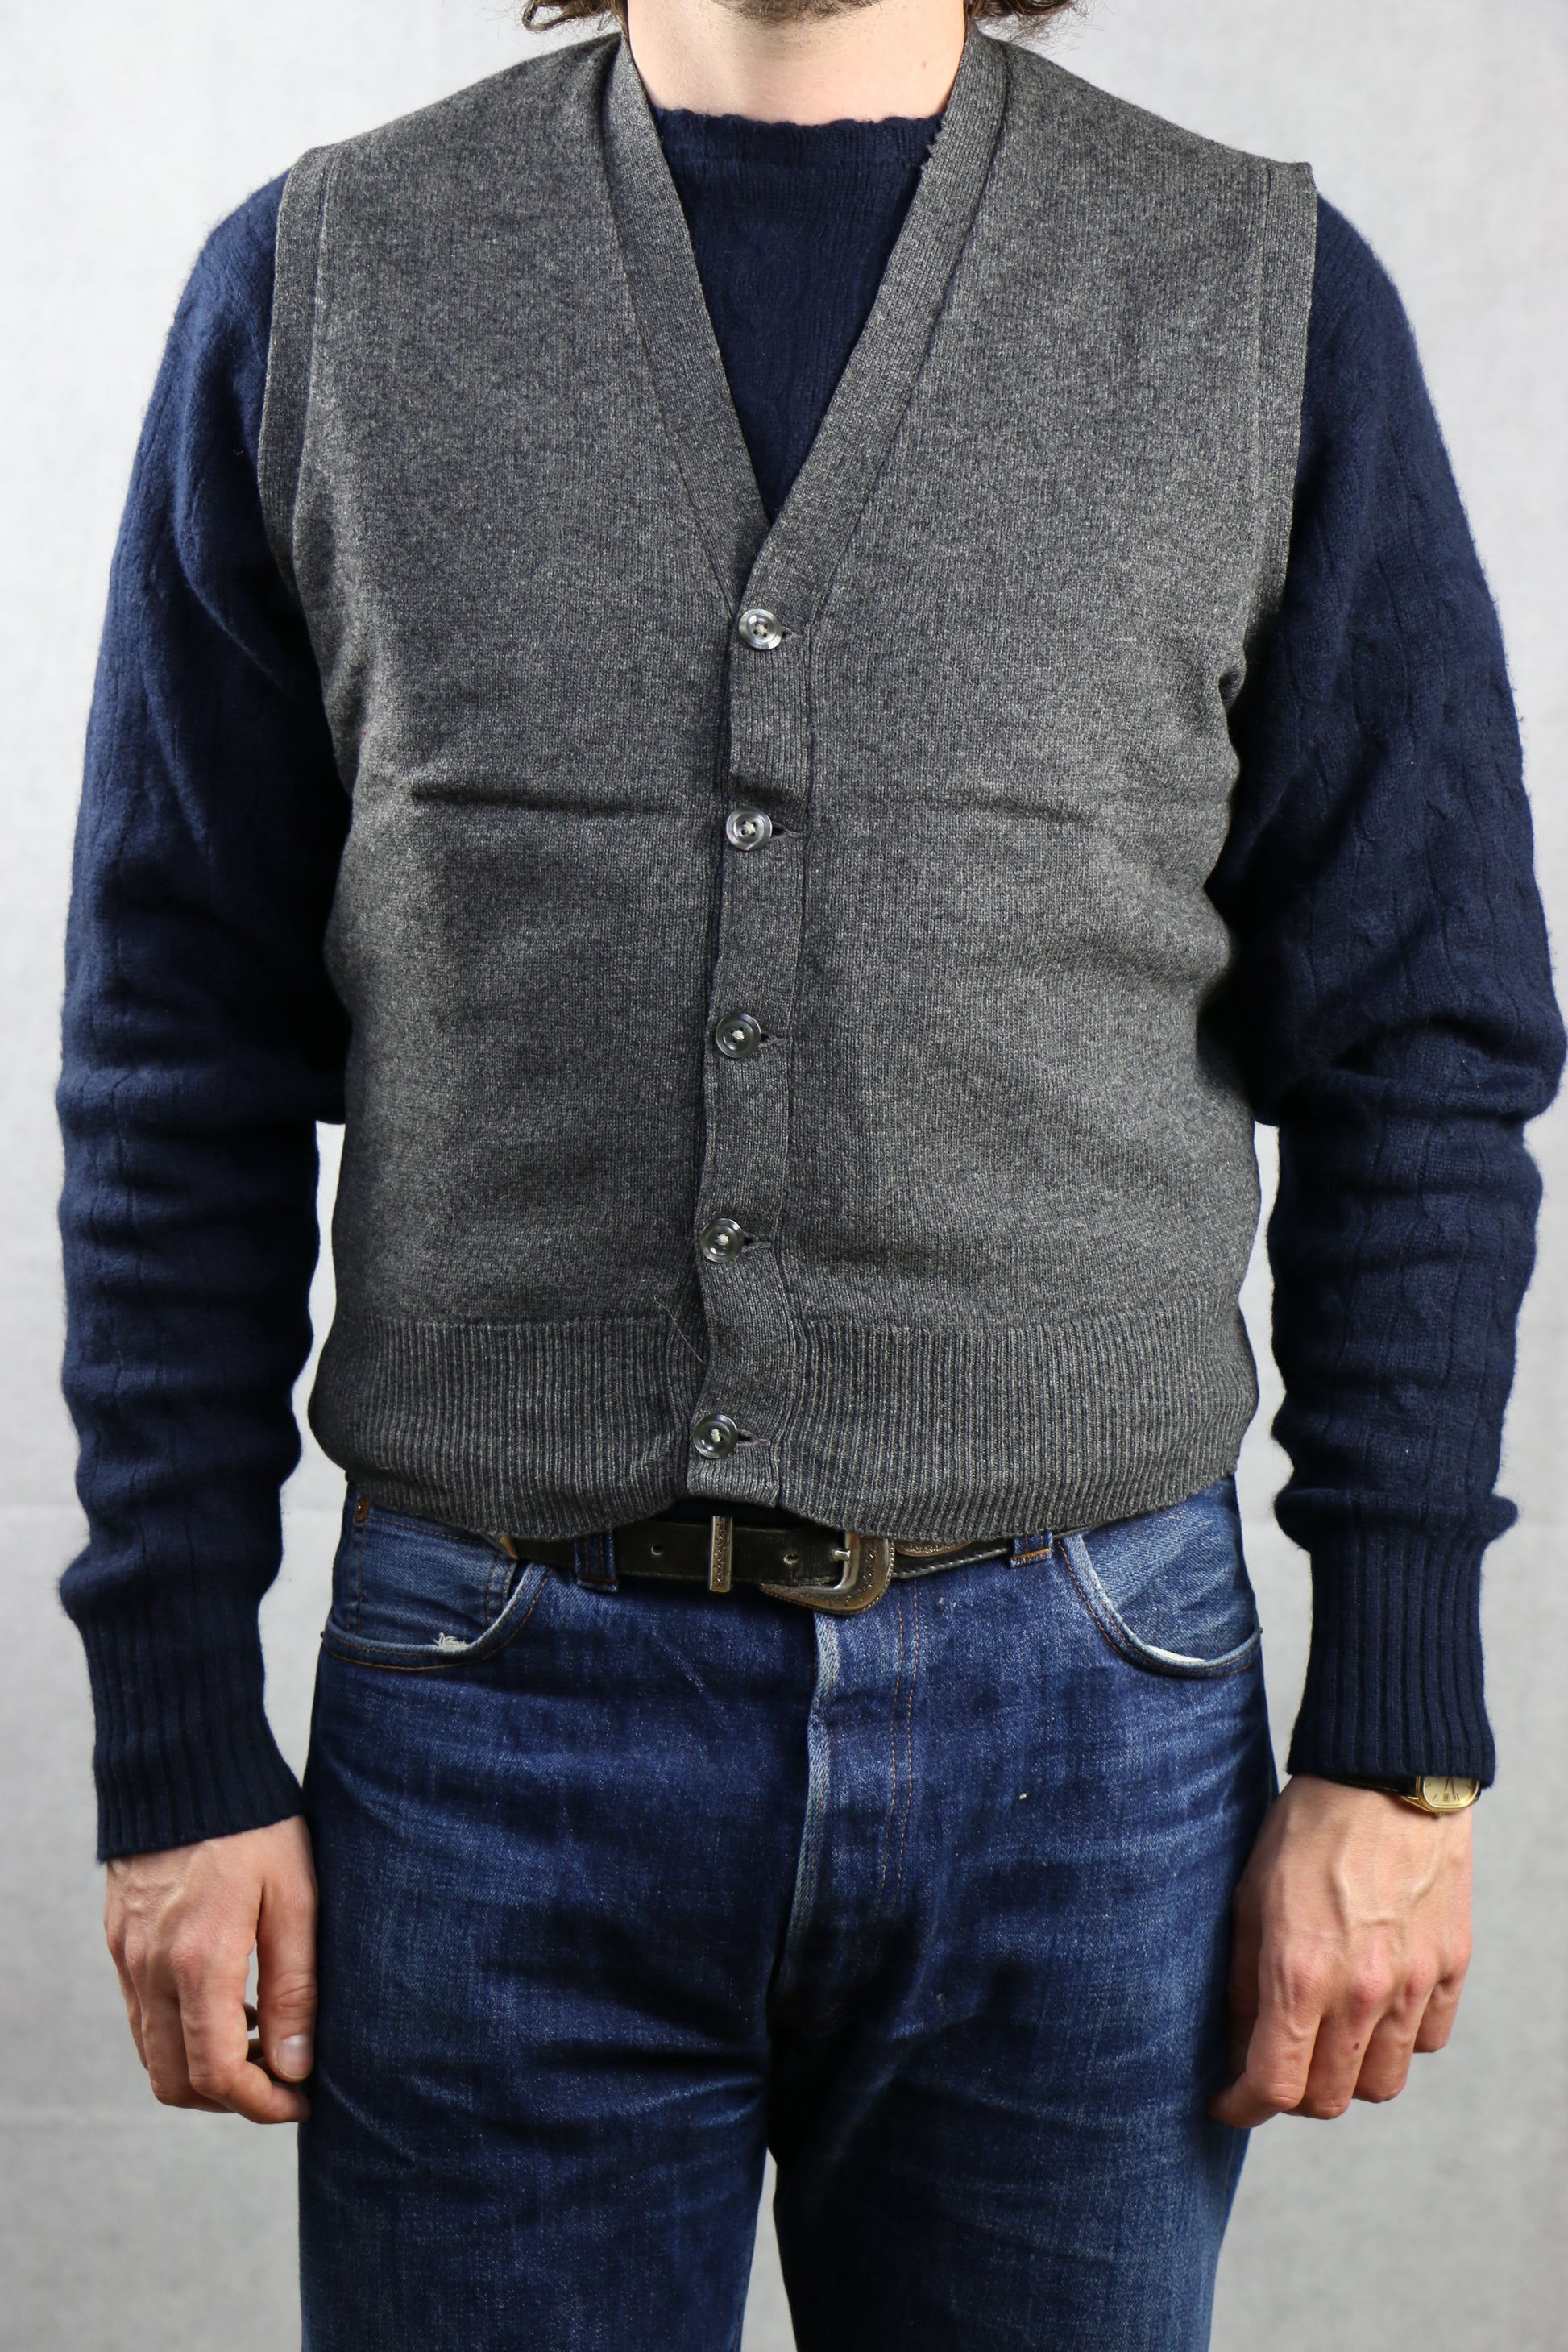 Alan Paine Grey Vest - vintage clothing clochard92.com